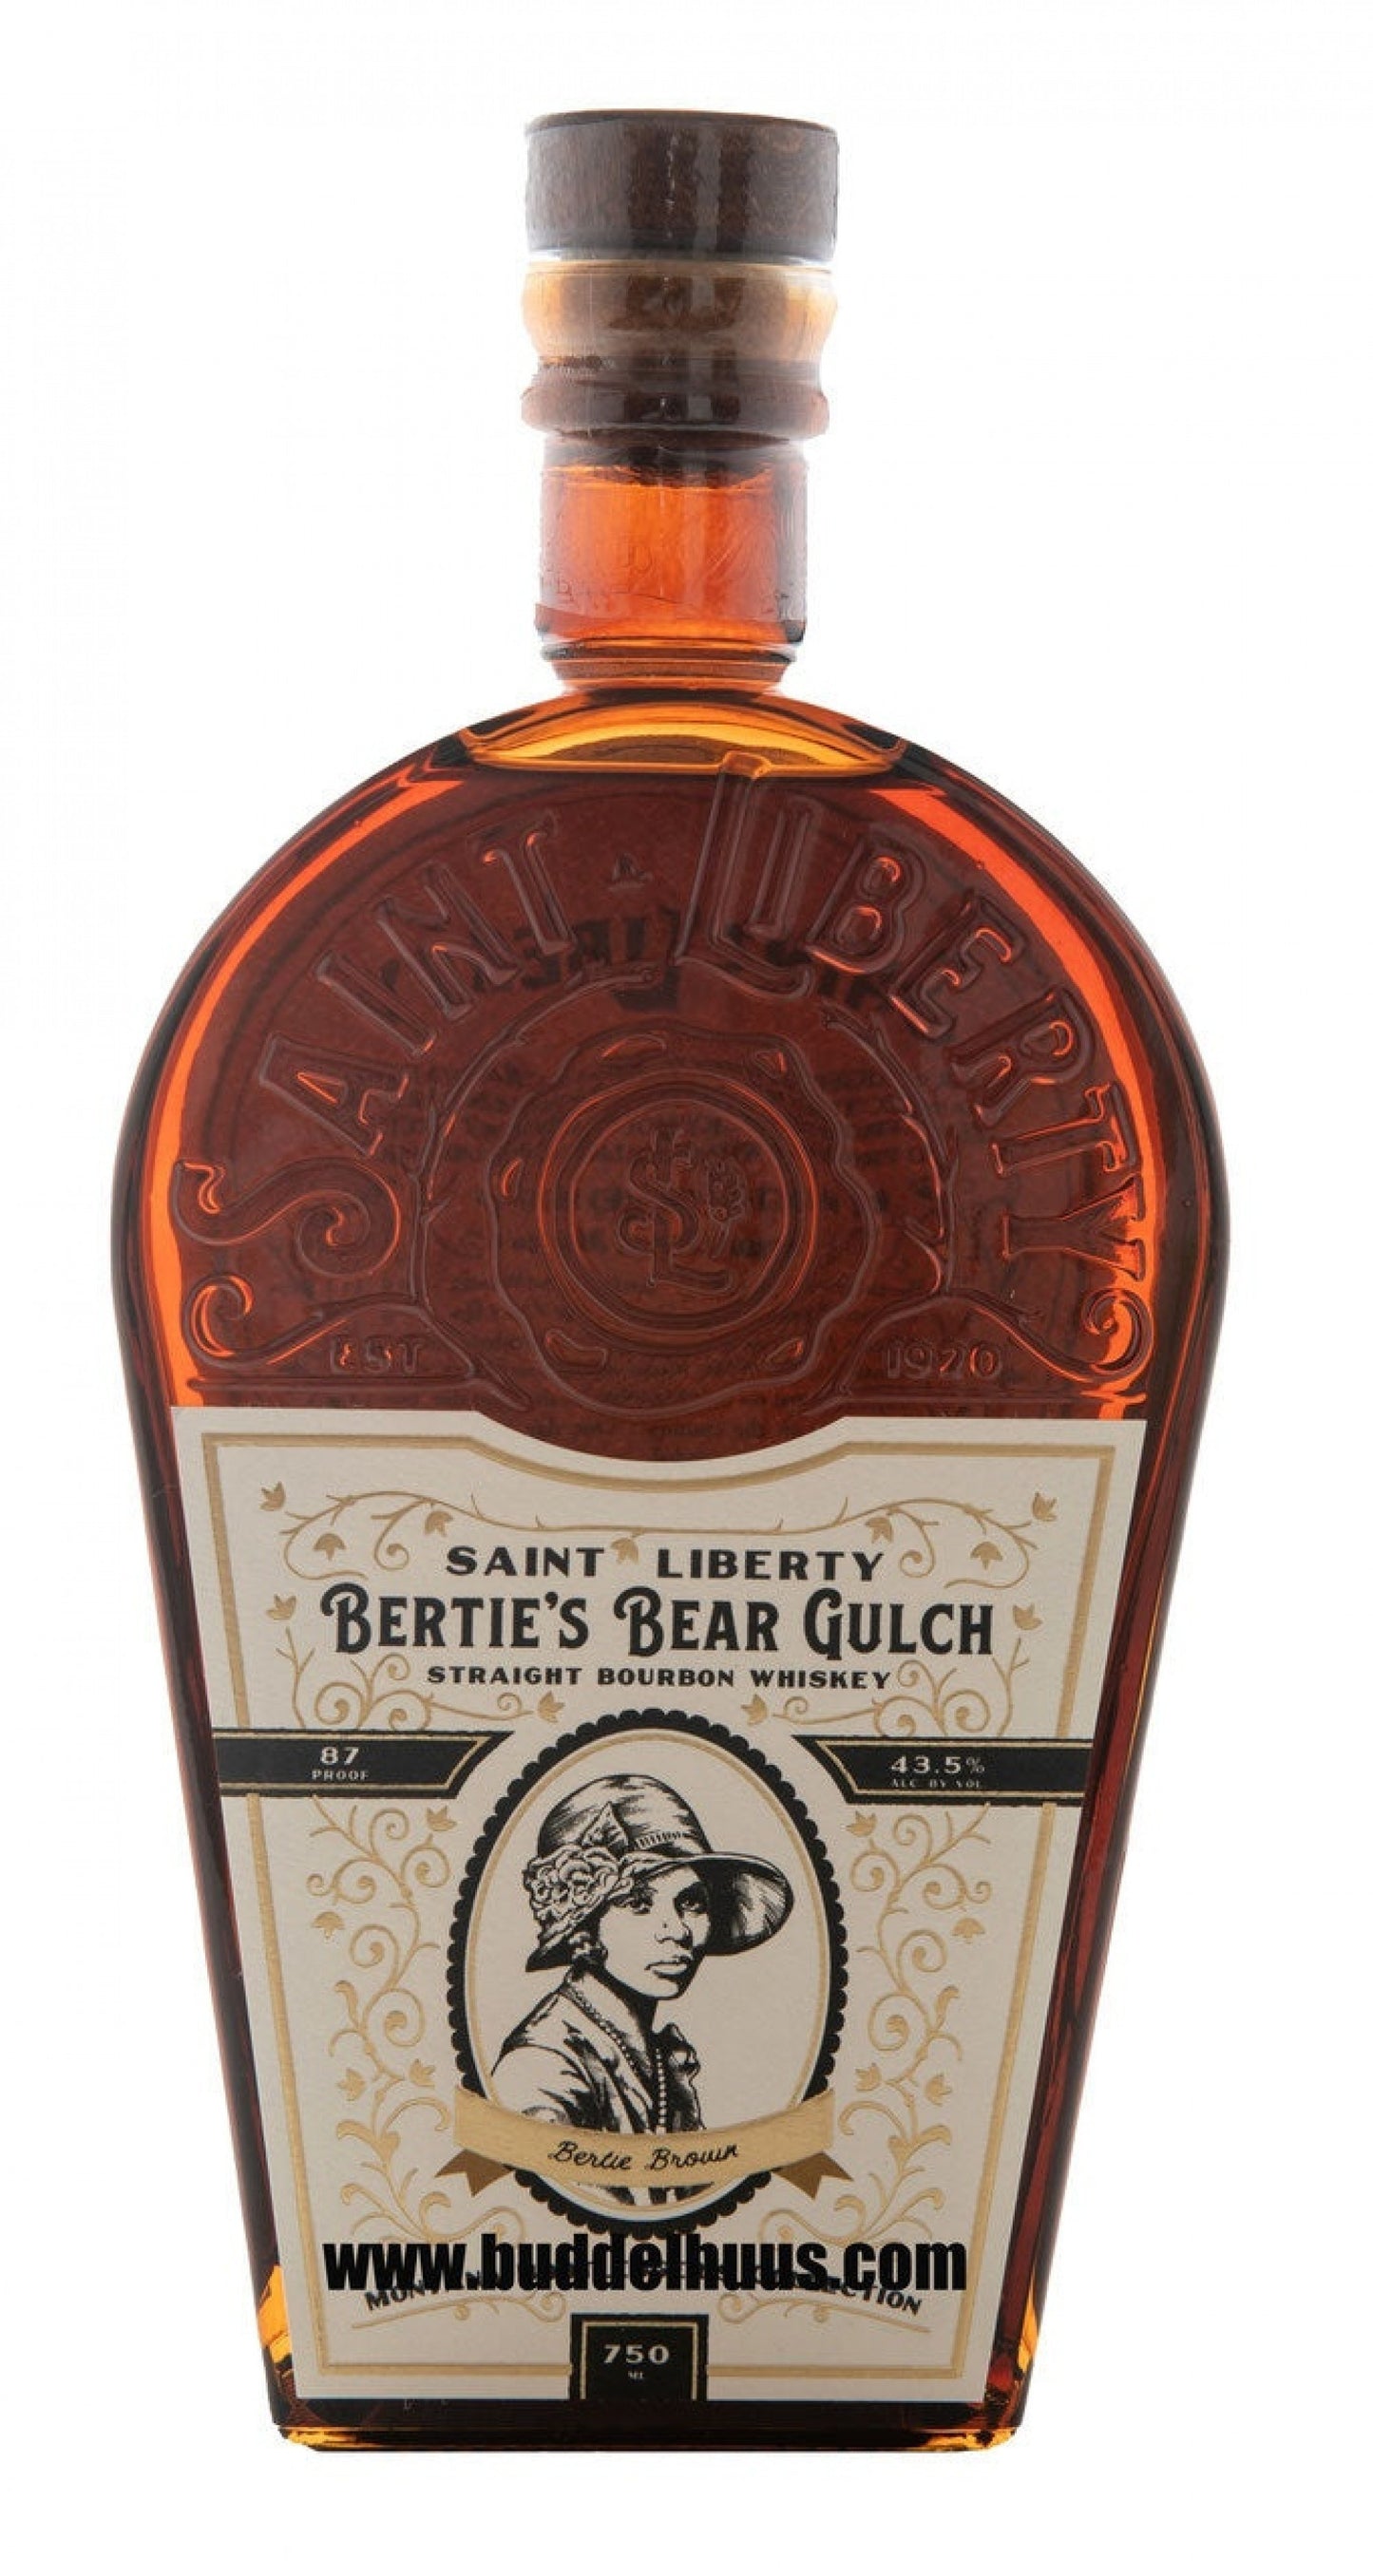 Saint Liberty Bertie's Bear Gulch Straight Bourbon Whiskey